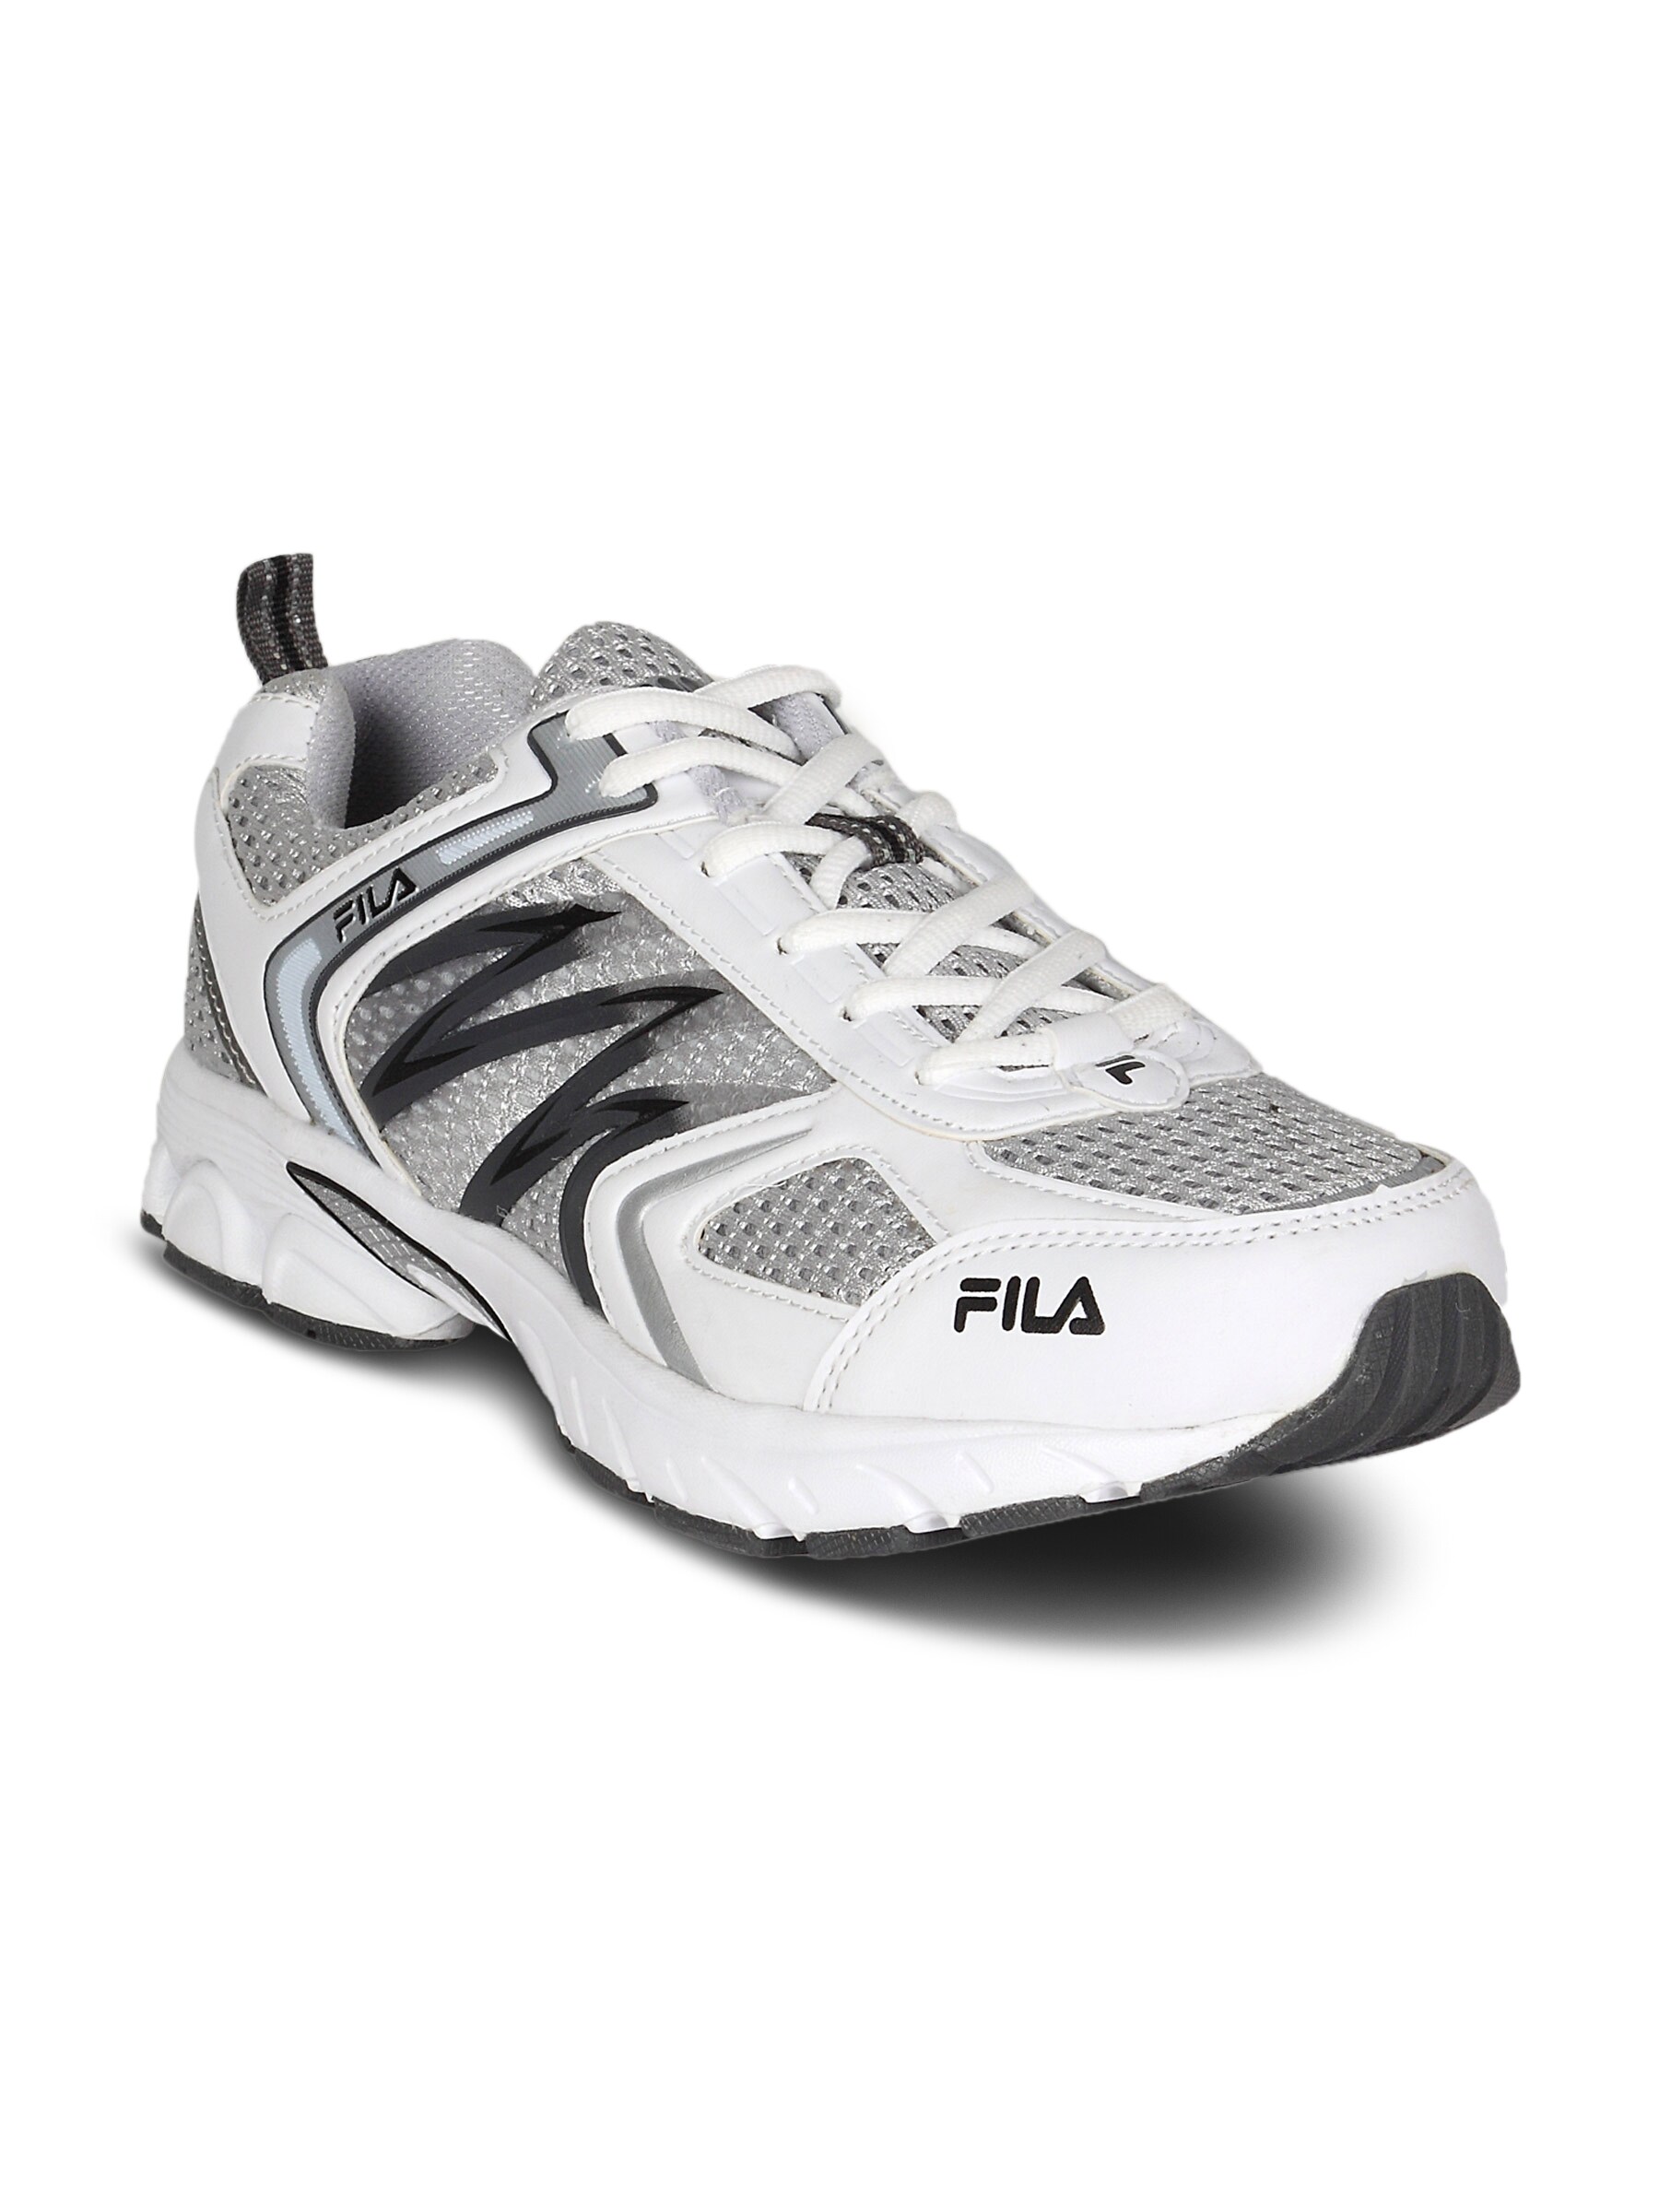 Fila Men's Caliber White Grey Shoe